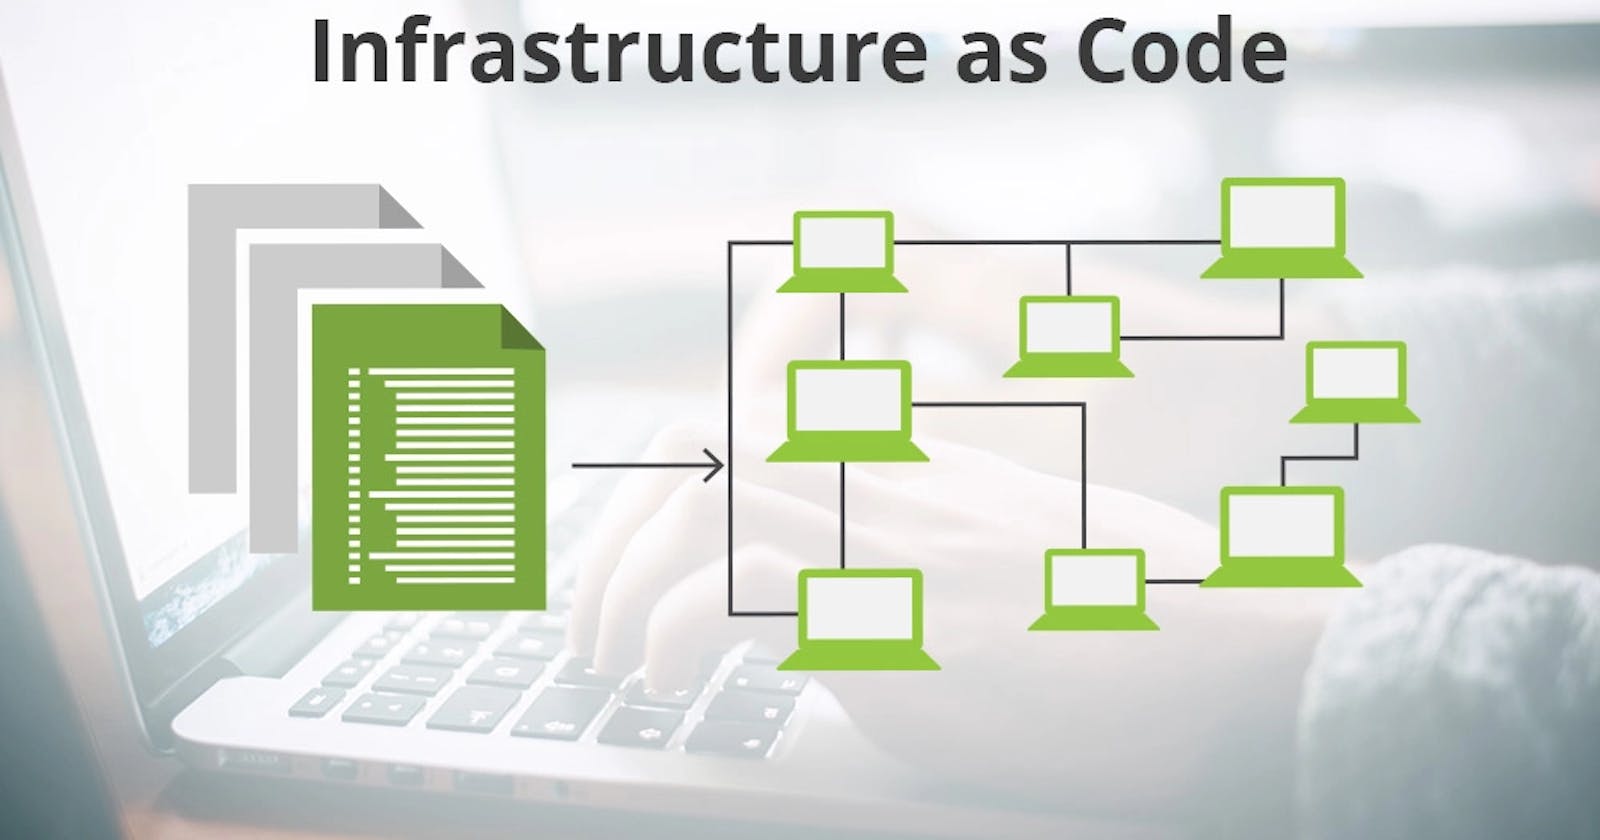 Demo - Infrastructure as Code Deployment using Terraform